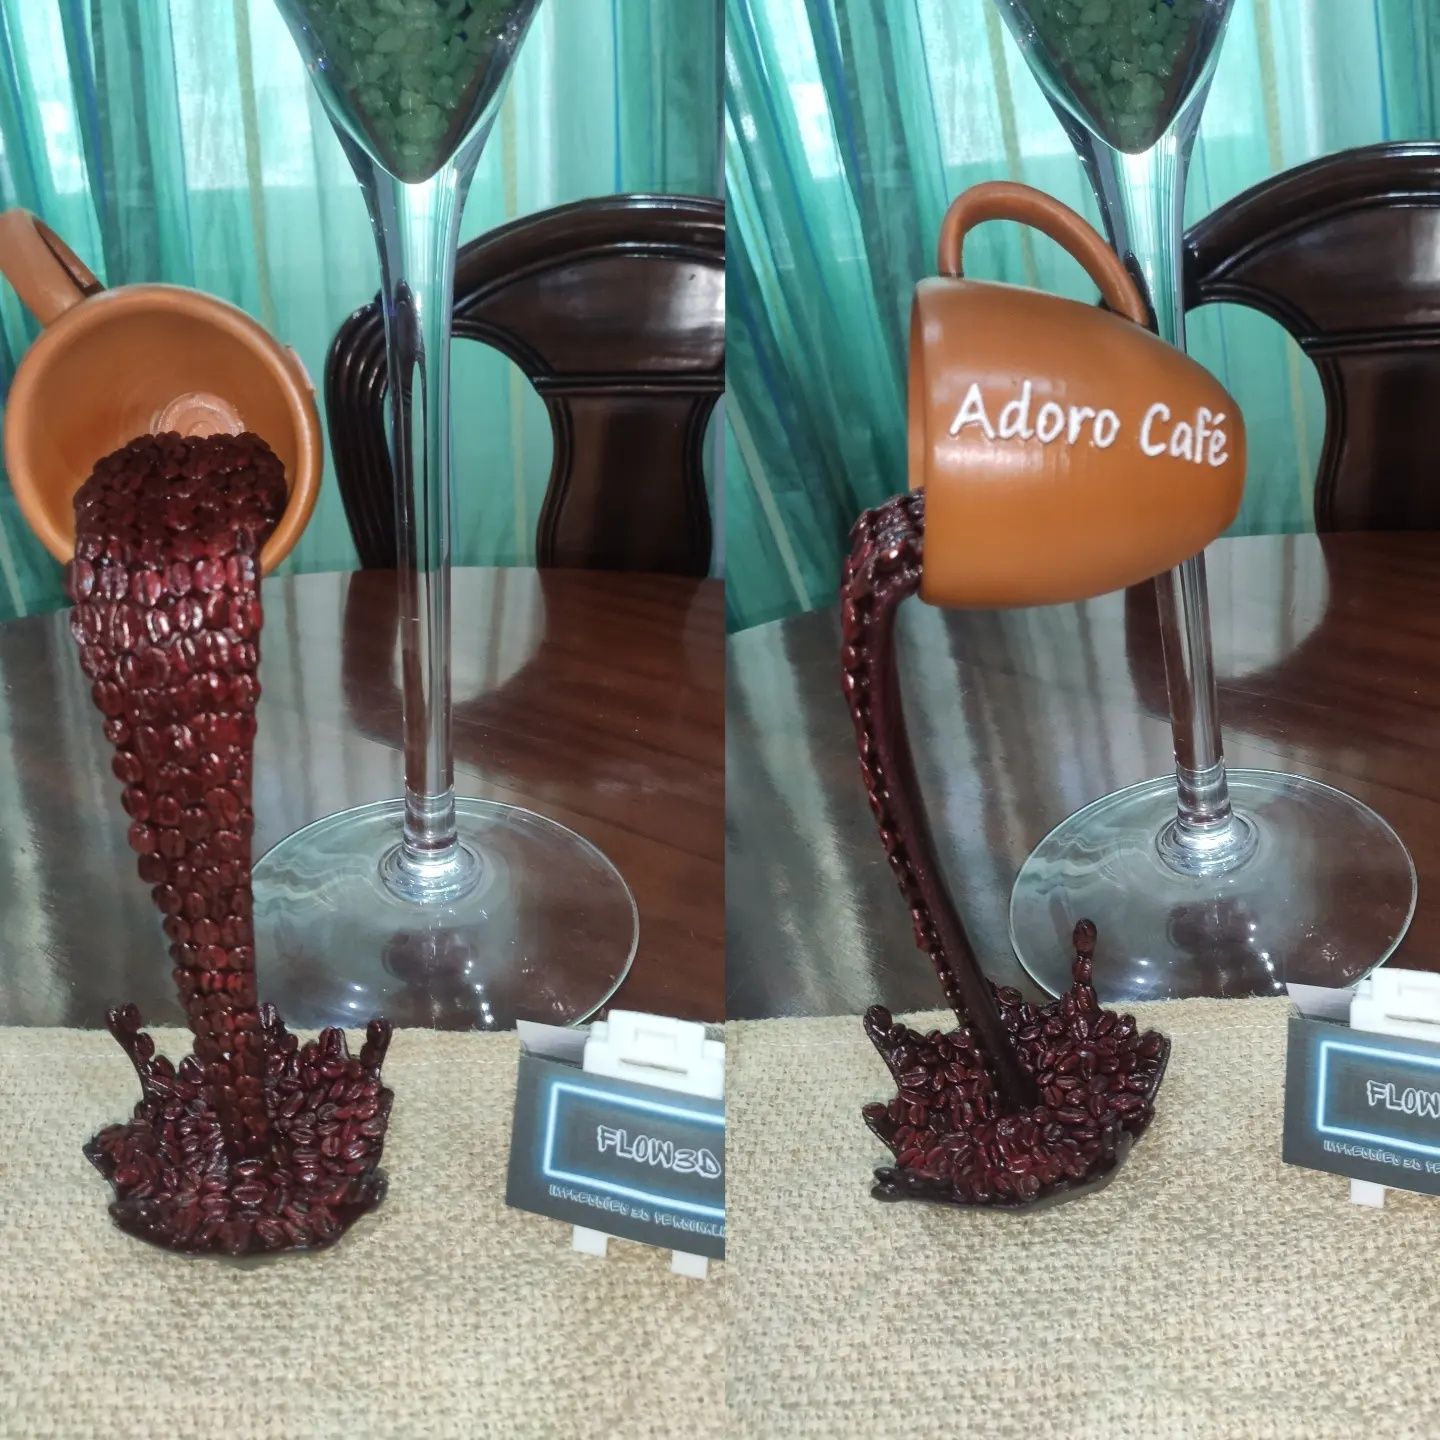 Chávenas personalizadas 3D